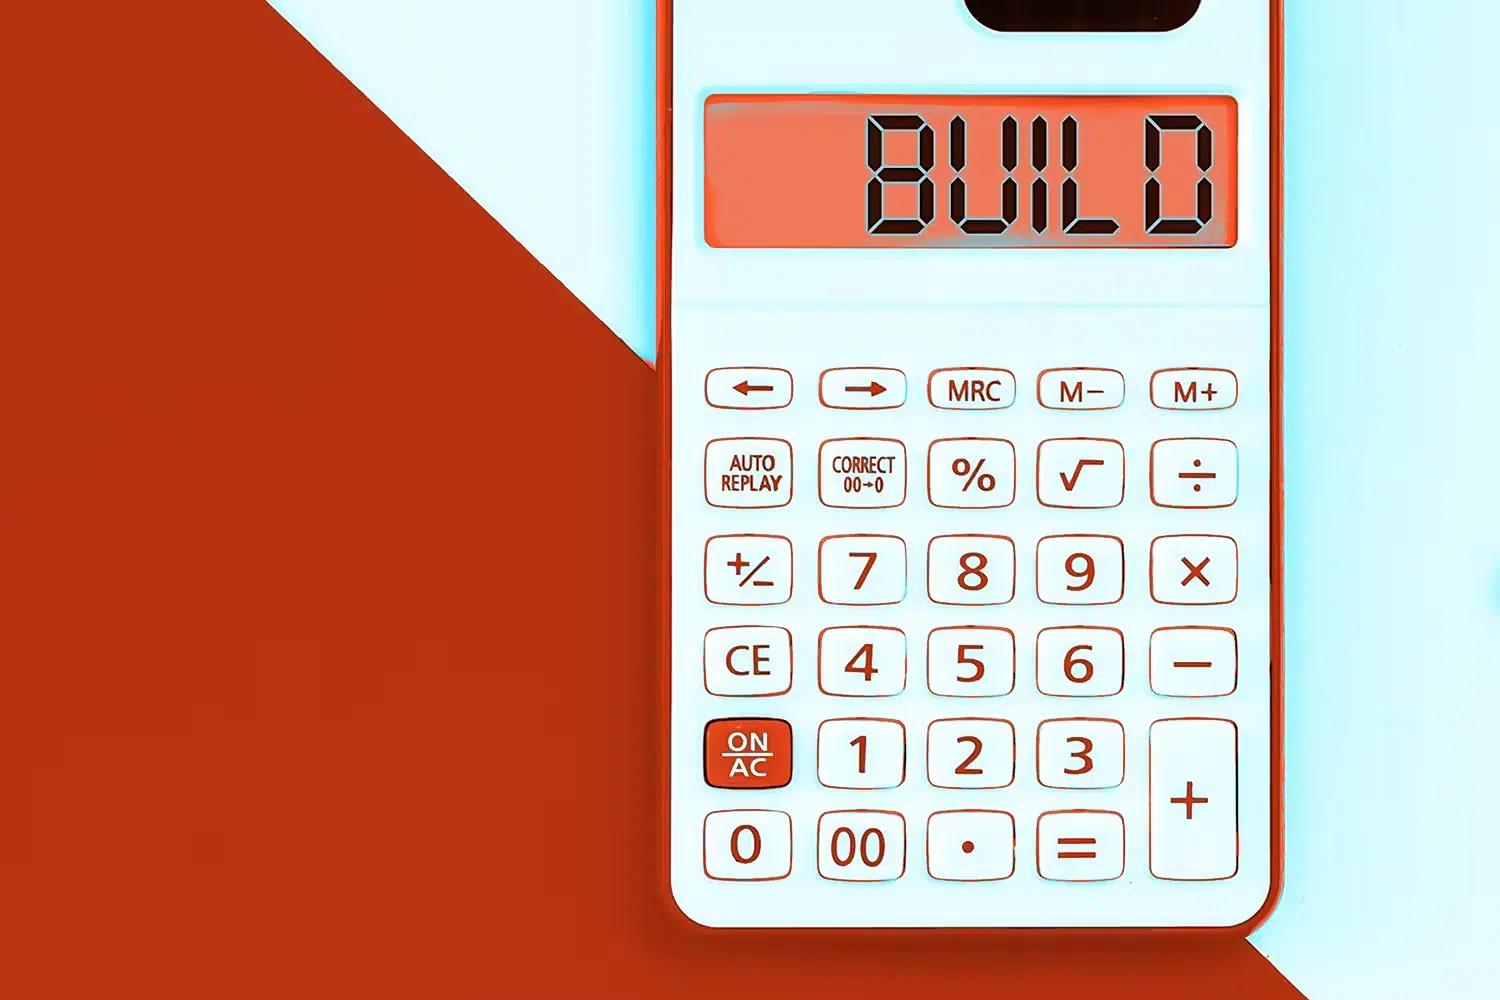 Cartoon digital calculator spelling "BUILD" on screen.